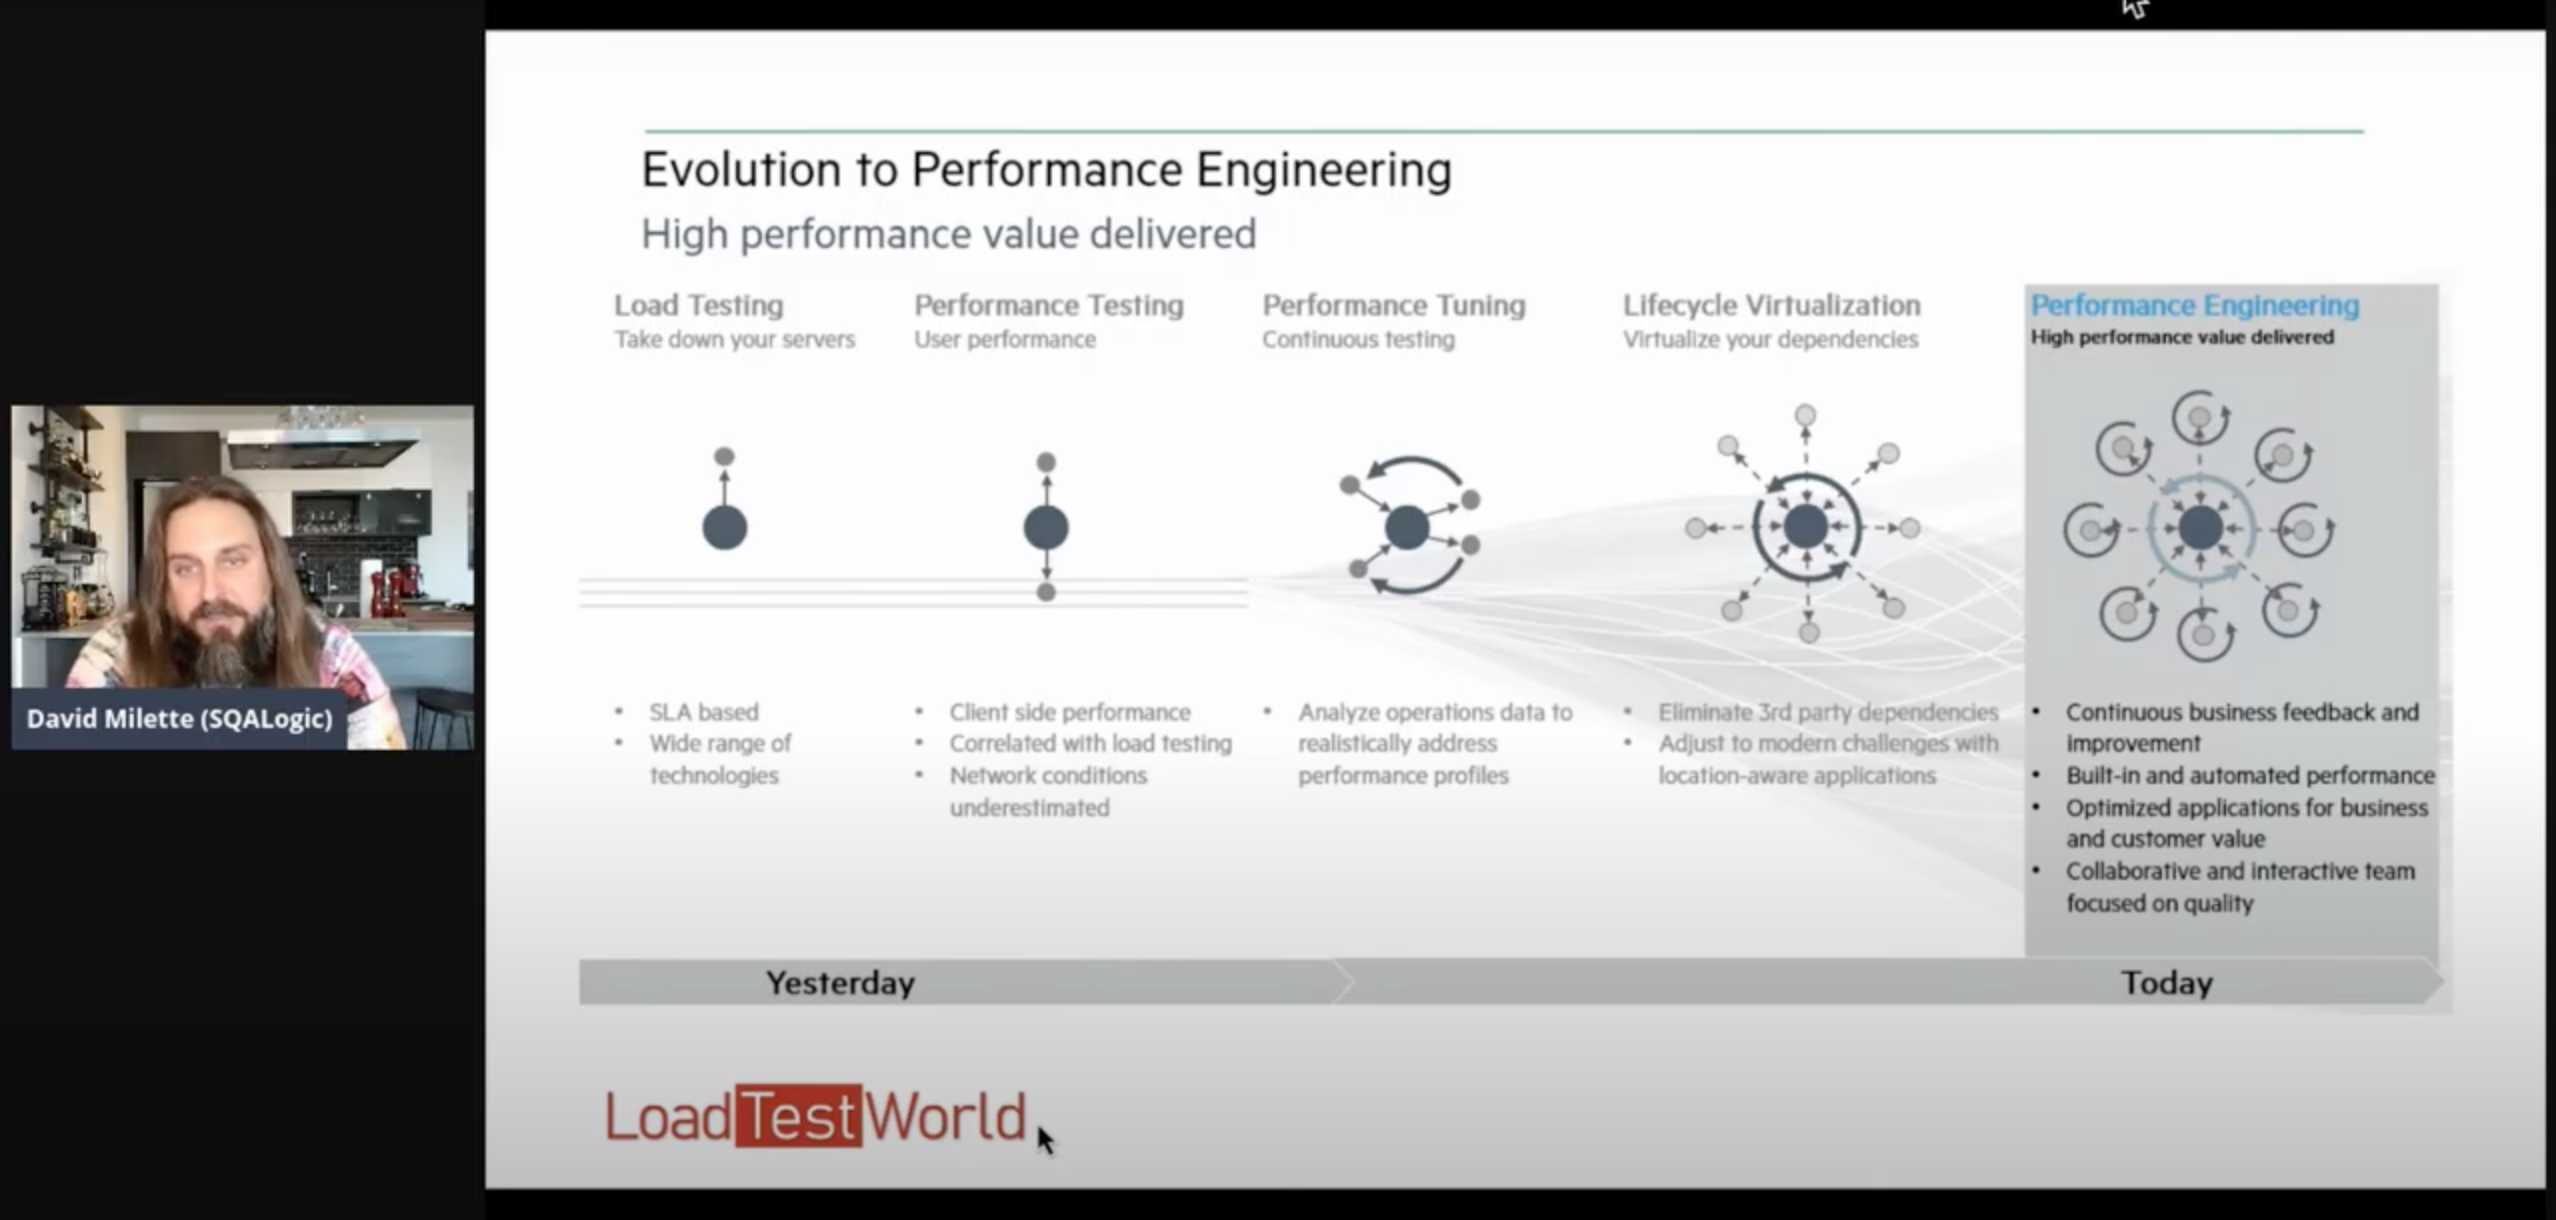 Evolution to Performance Engineering